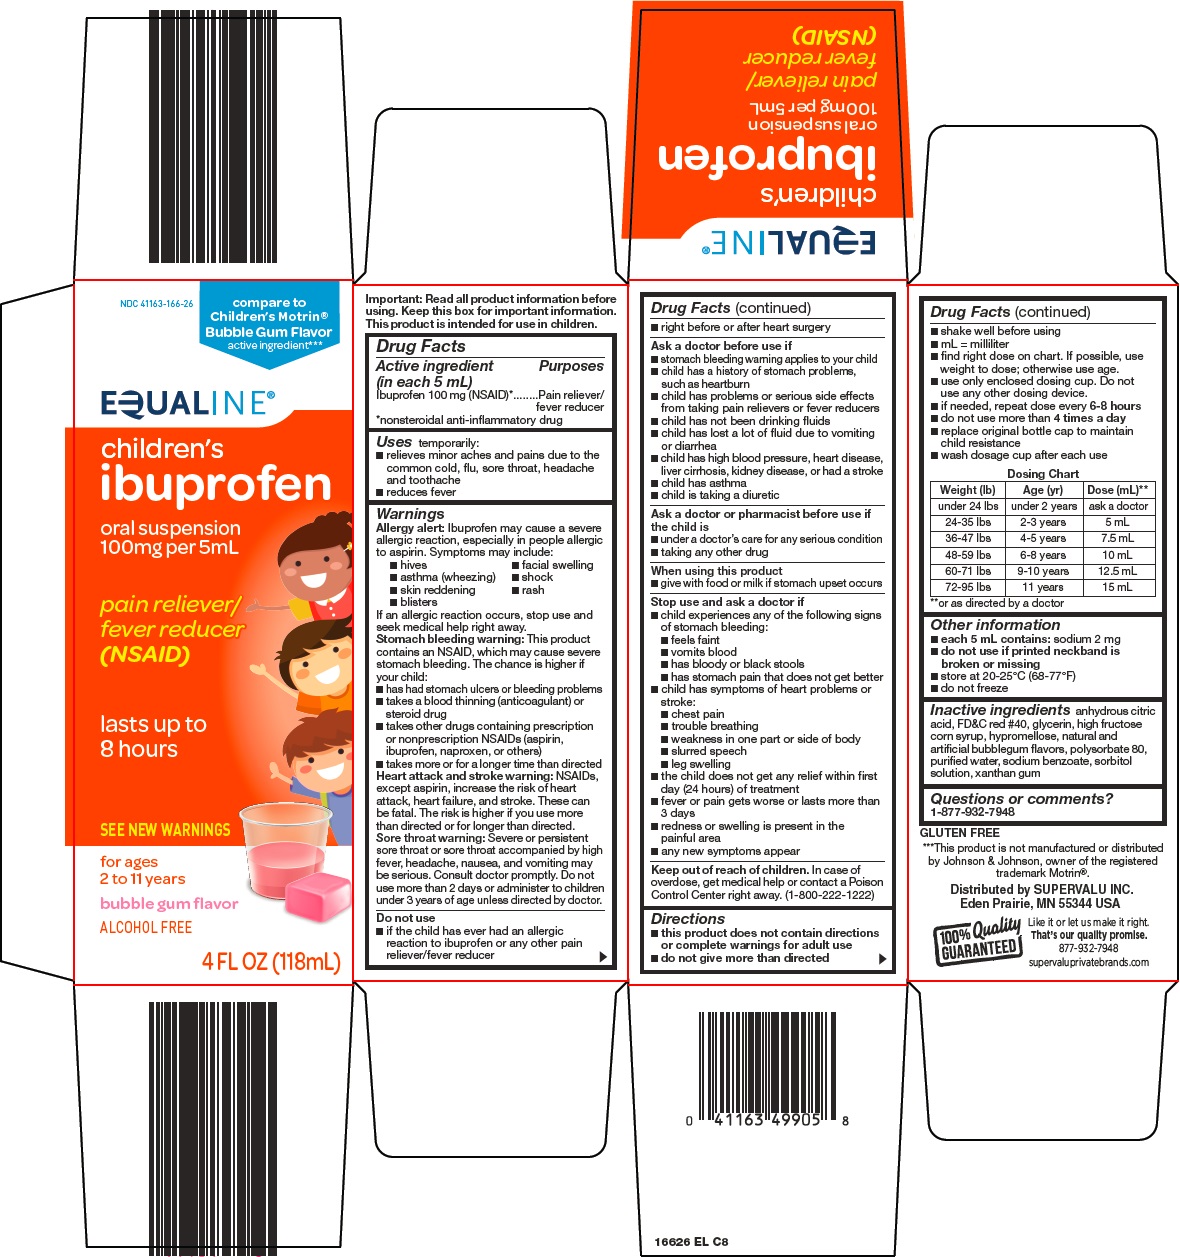 166EL-childrens-ibuprofen.jpg